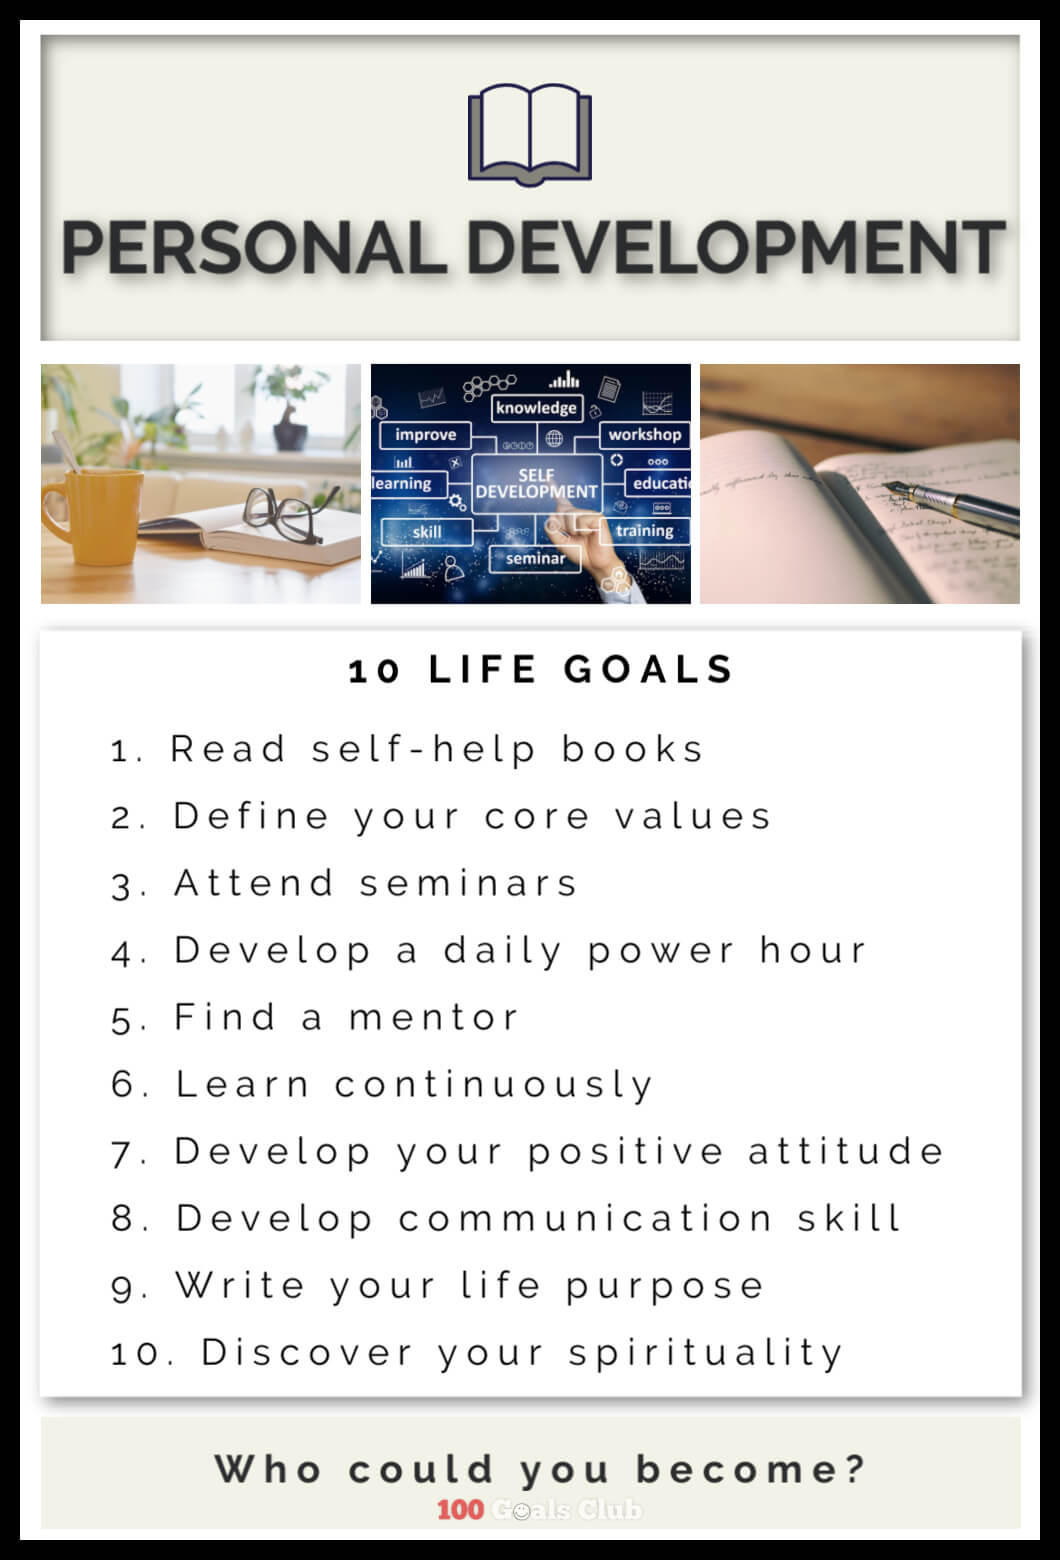 Benefits of Personal Development